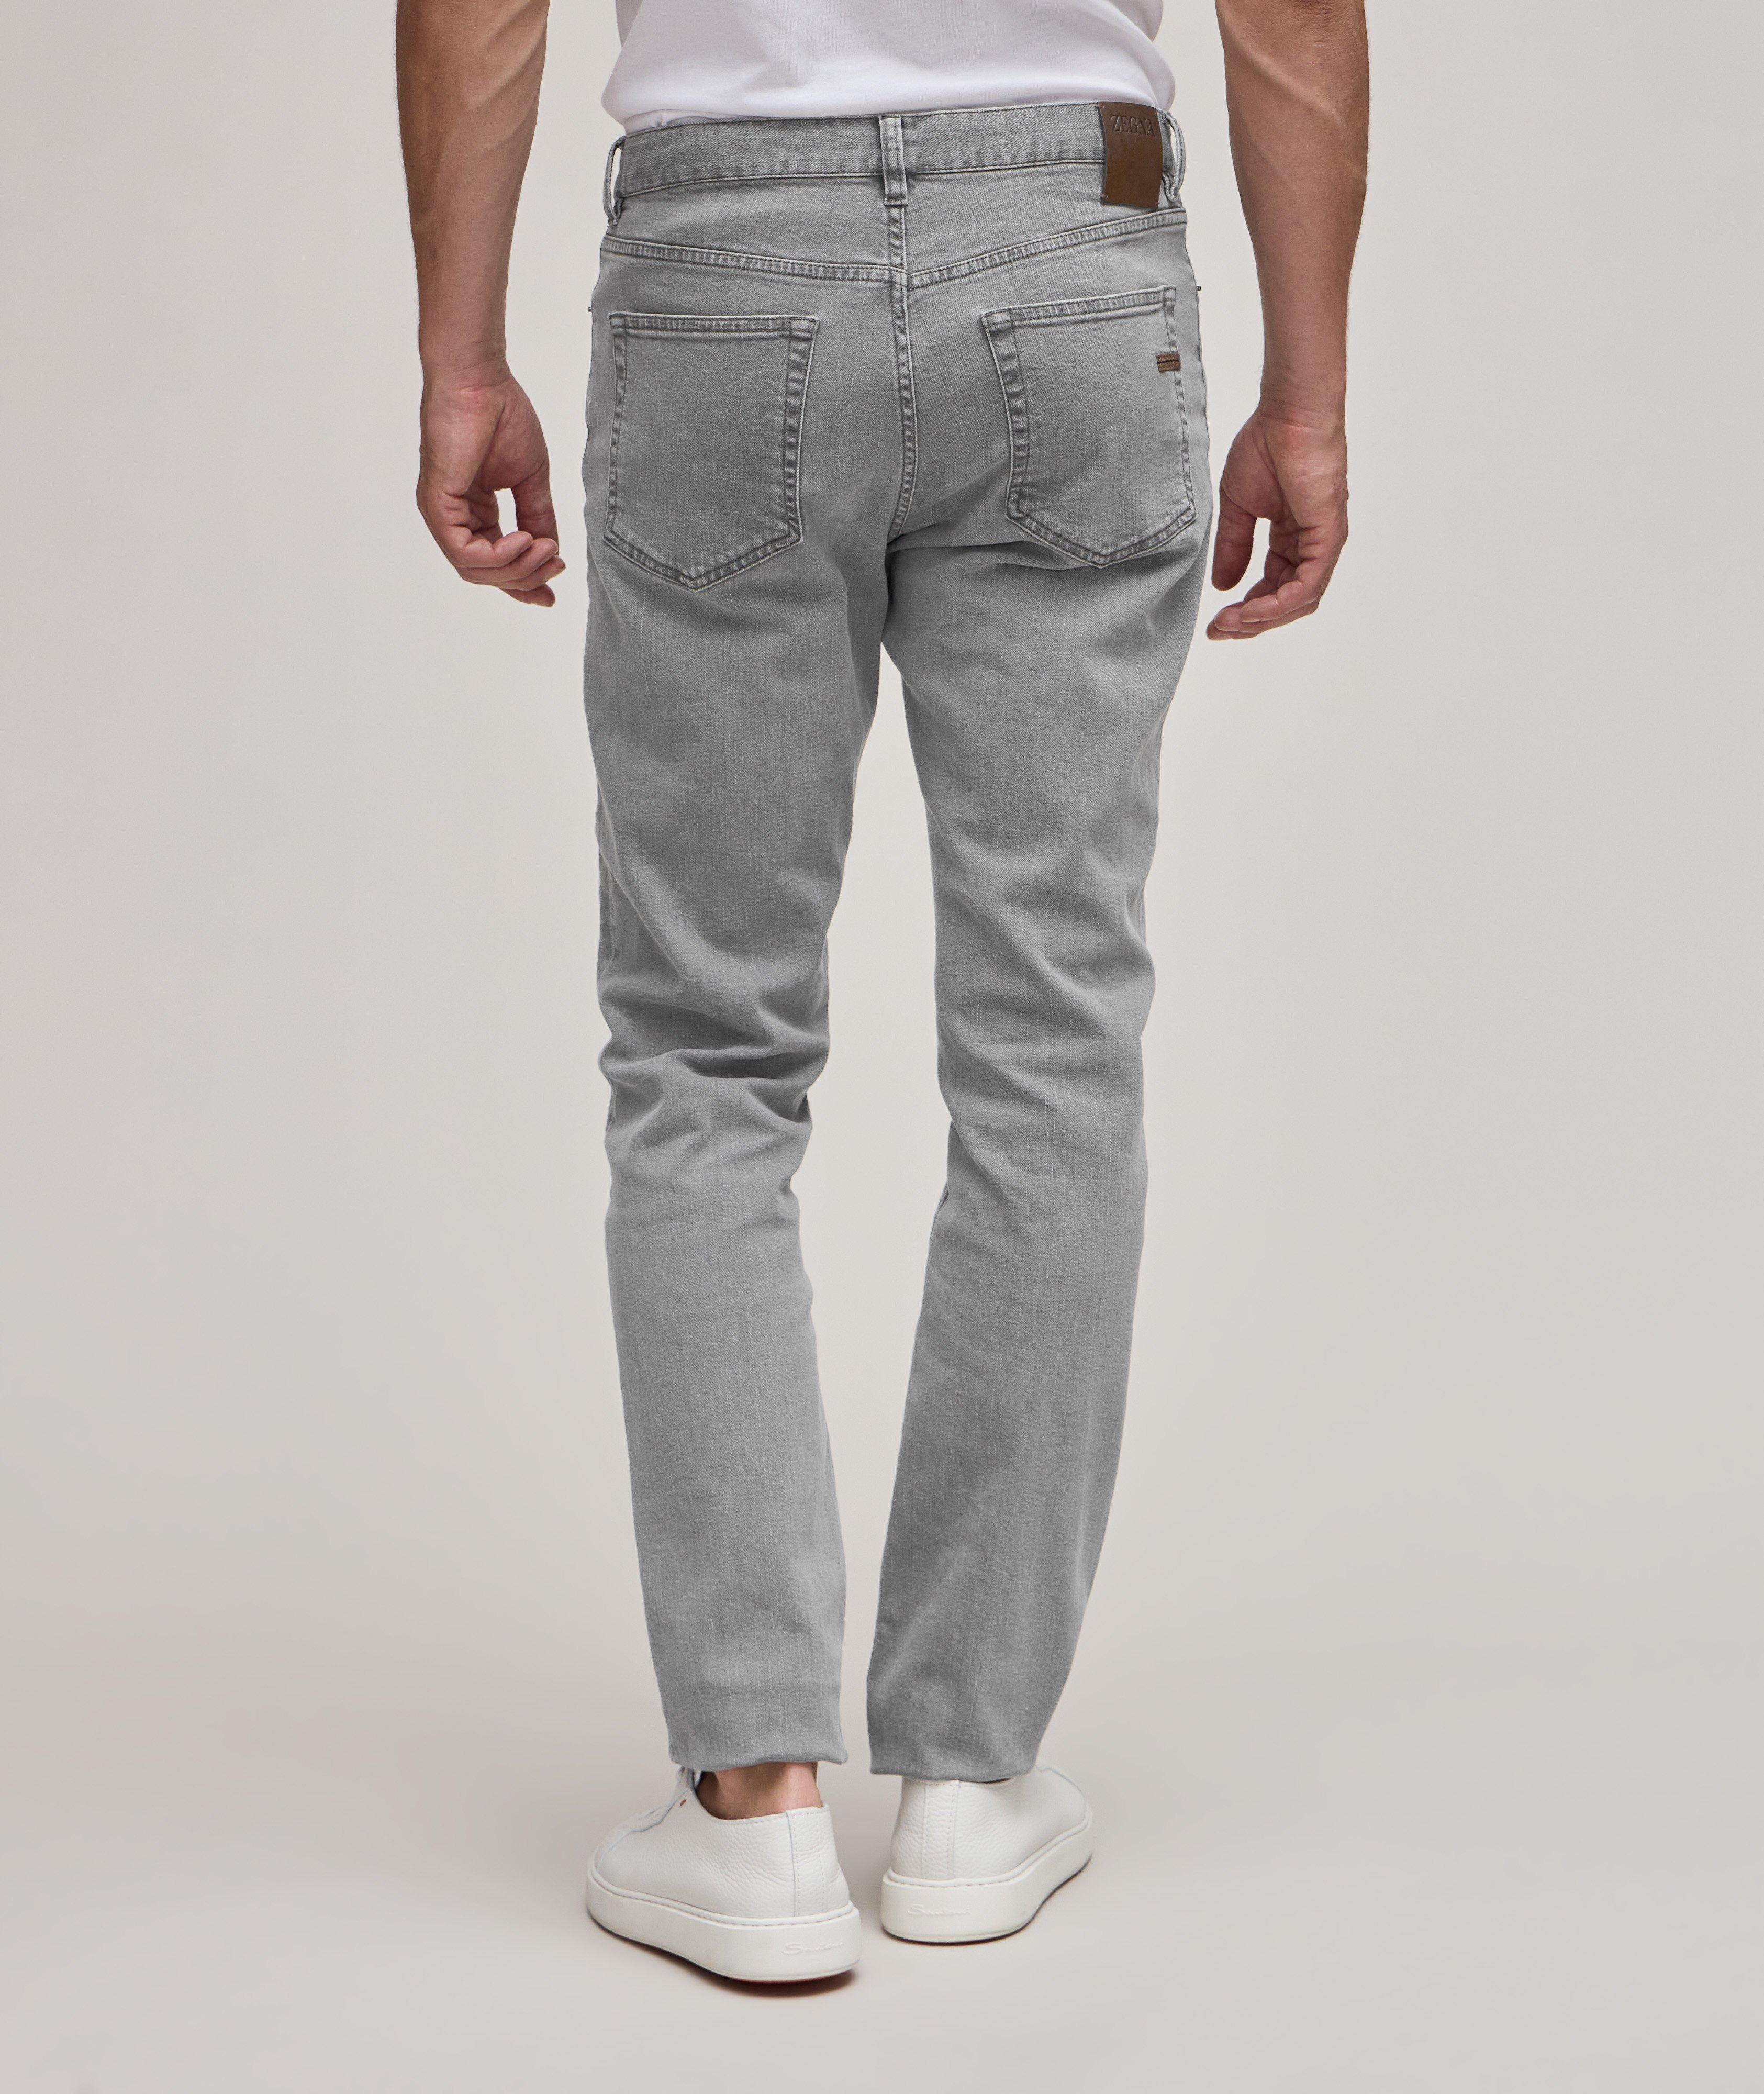 City Slim-Fit Stretch-Cotton Jeans image 3